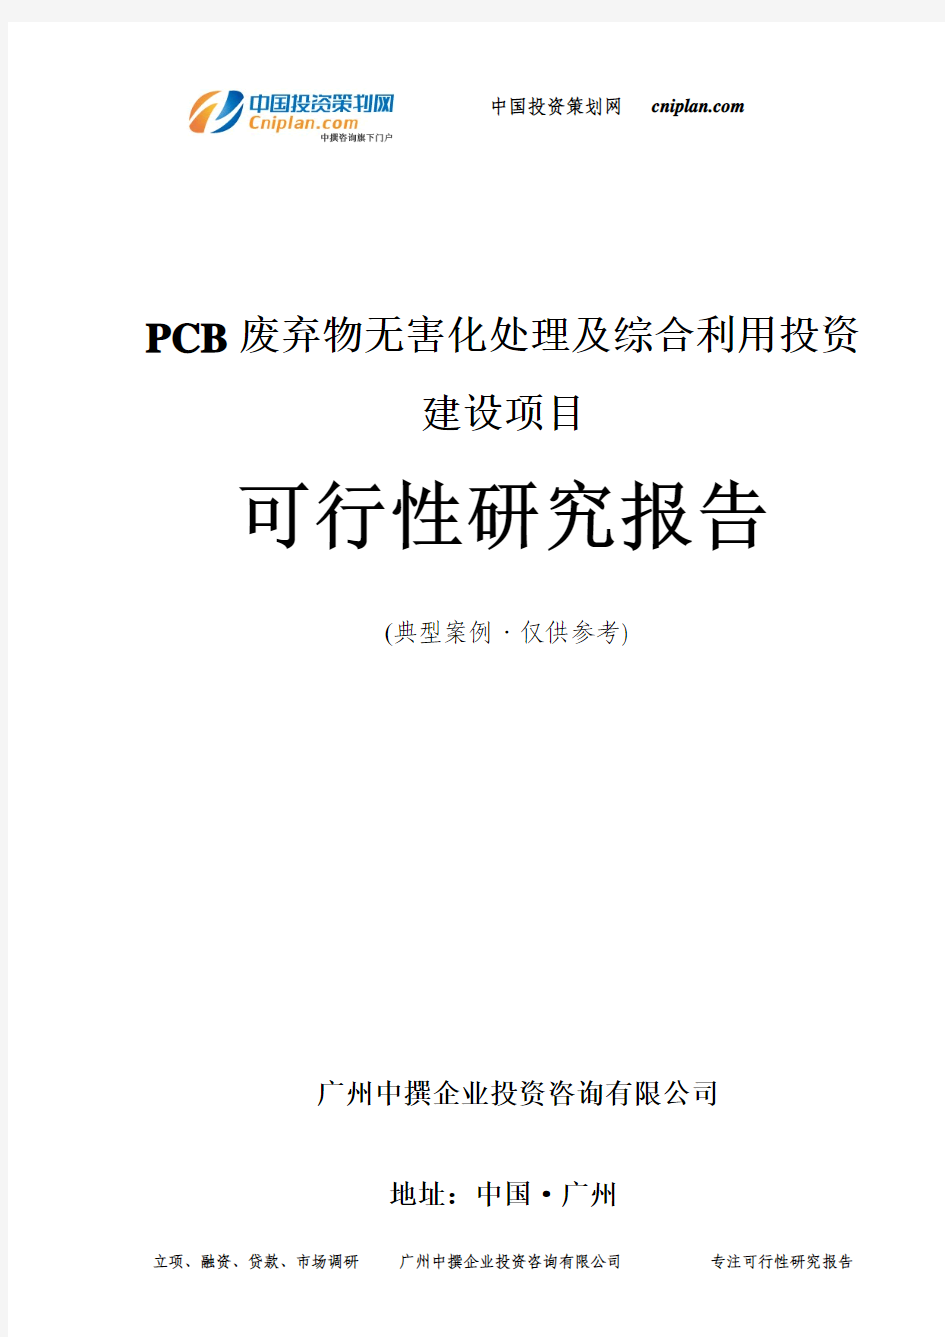 PCB废弃物无害化处理及综合利用投资建设项目可行性研究报告-广州中撰咨询